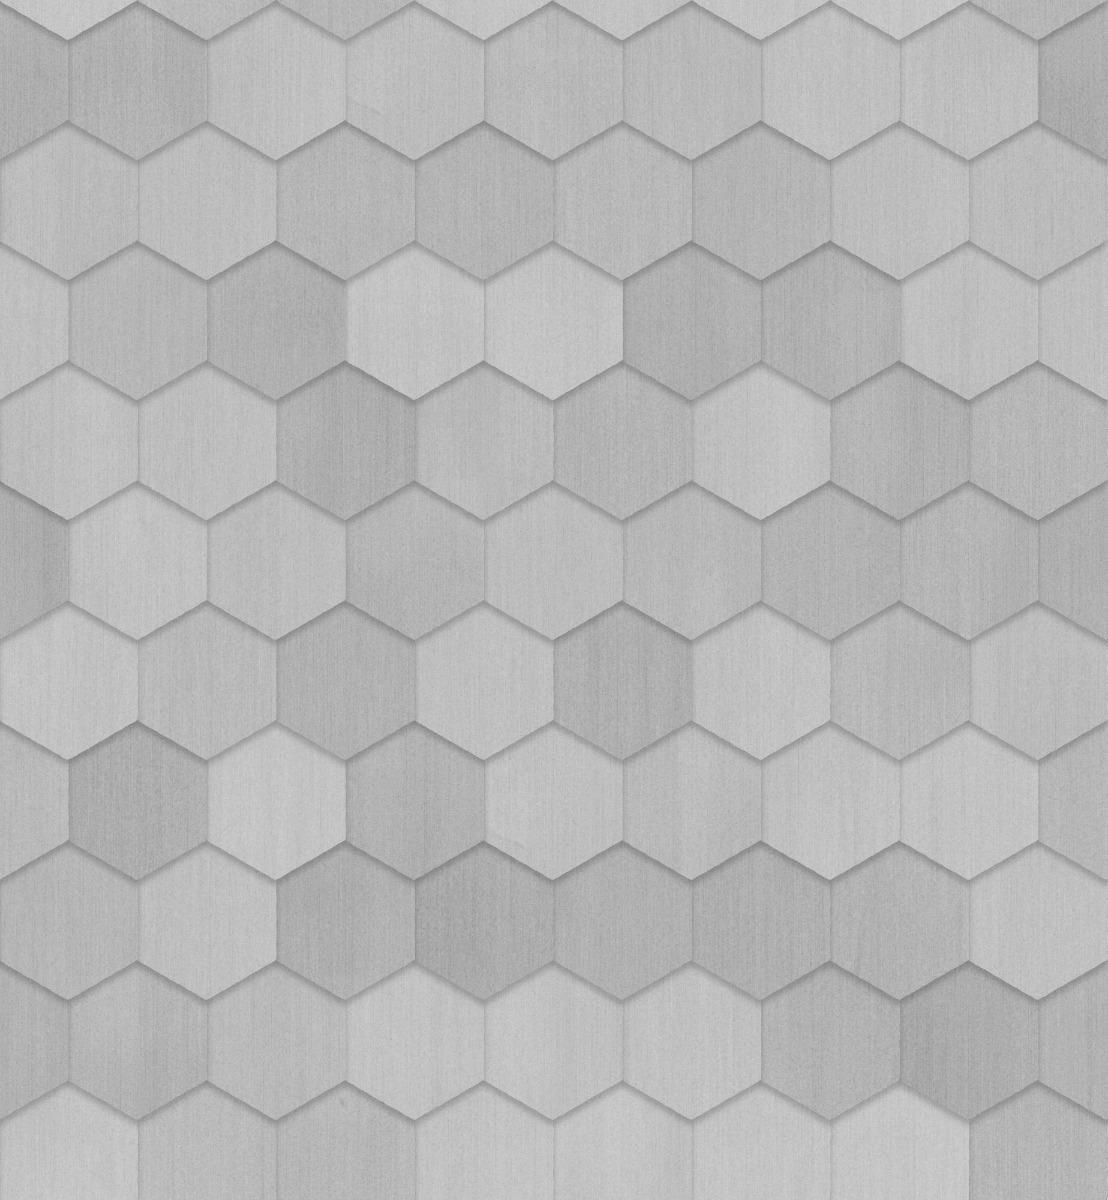 A seamless metal texture with aluminium sheets arranged in a Hexagonal pattern